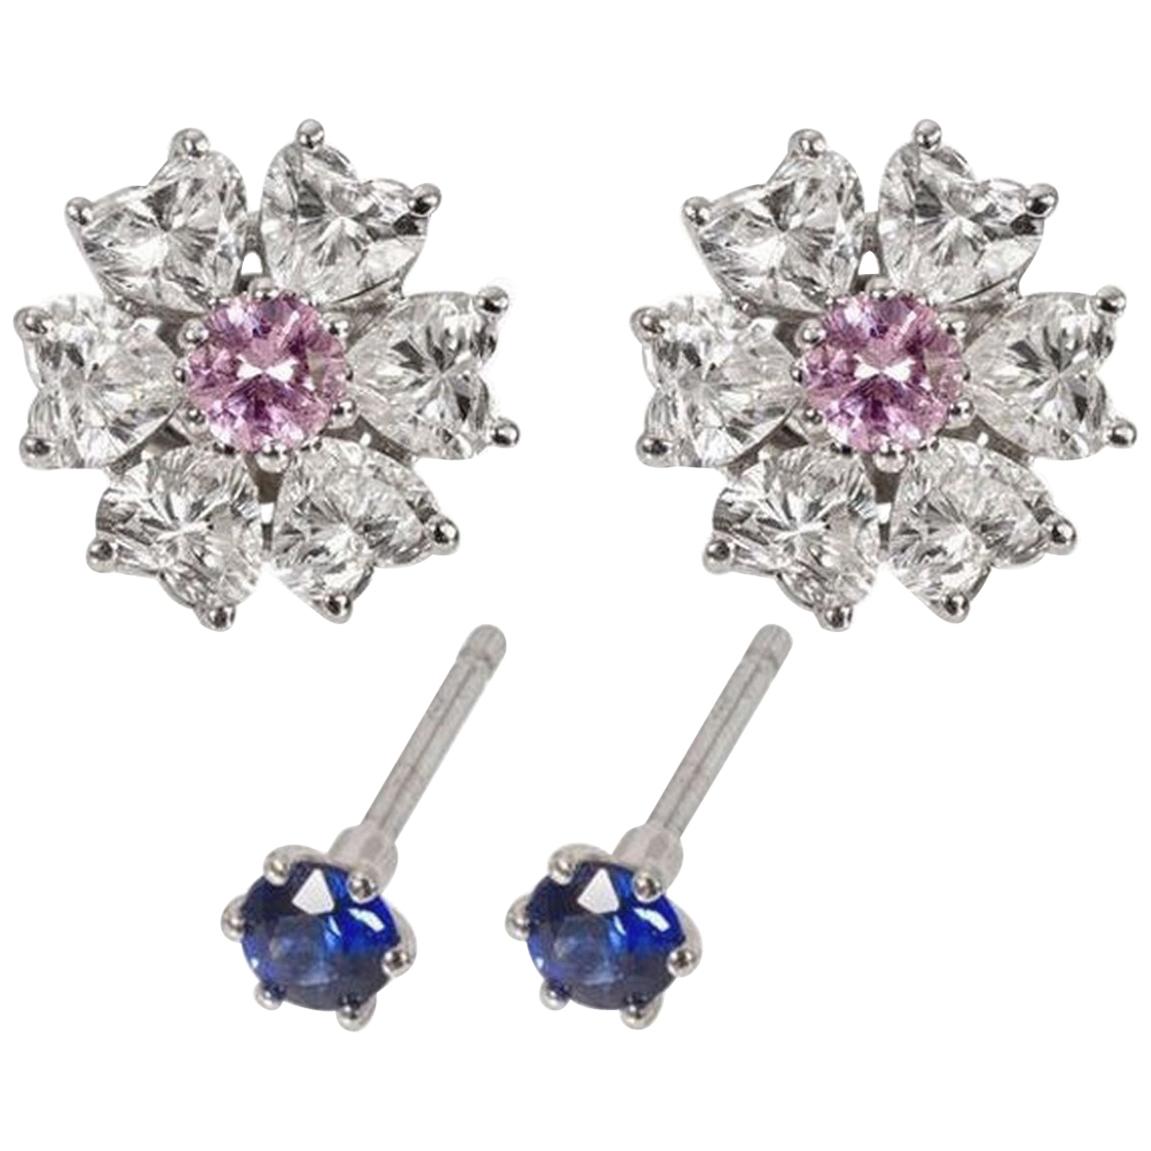 4.05 Carat Floral Interchangeable Diamond &Gems Earrings Set with Heart Shape